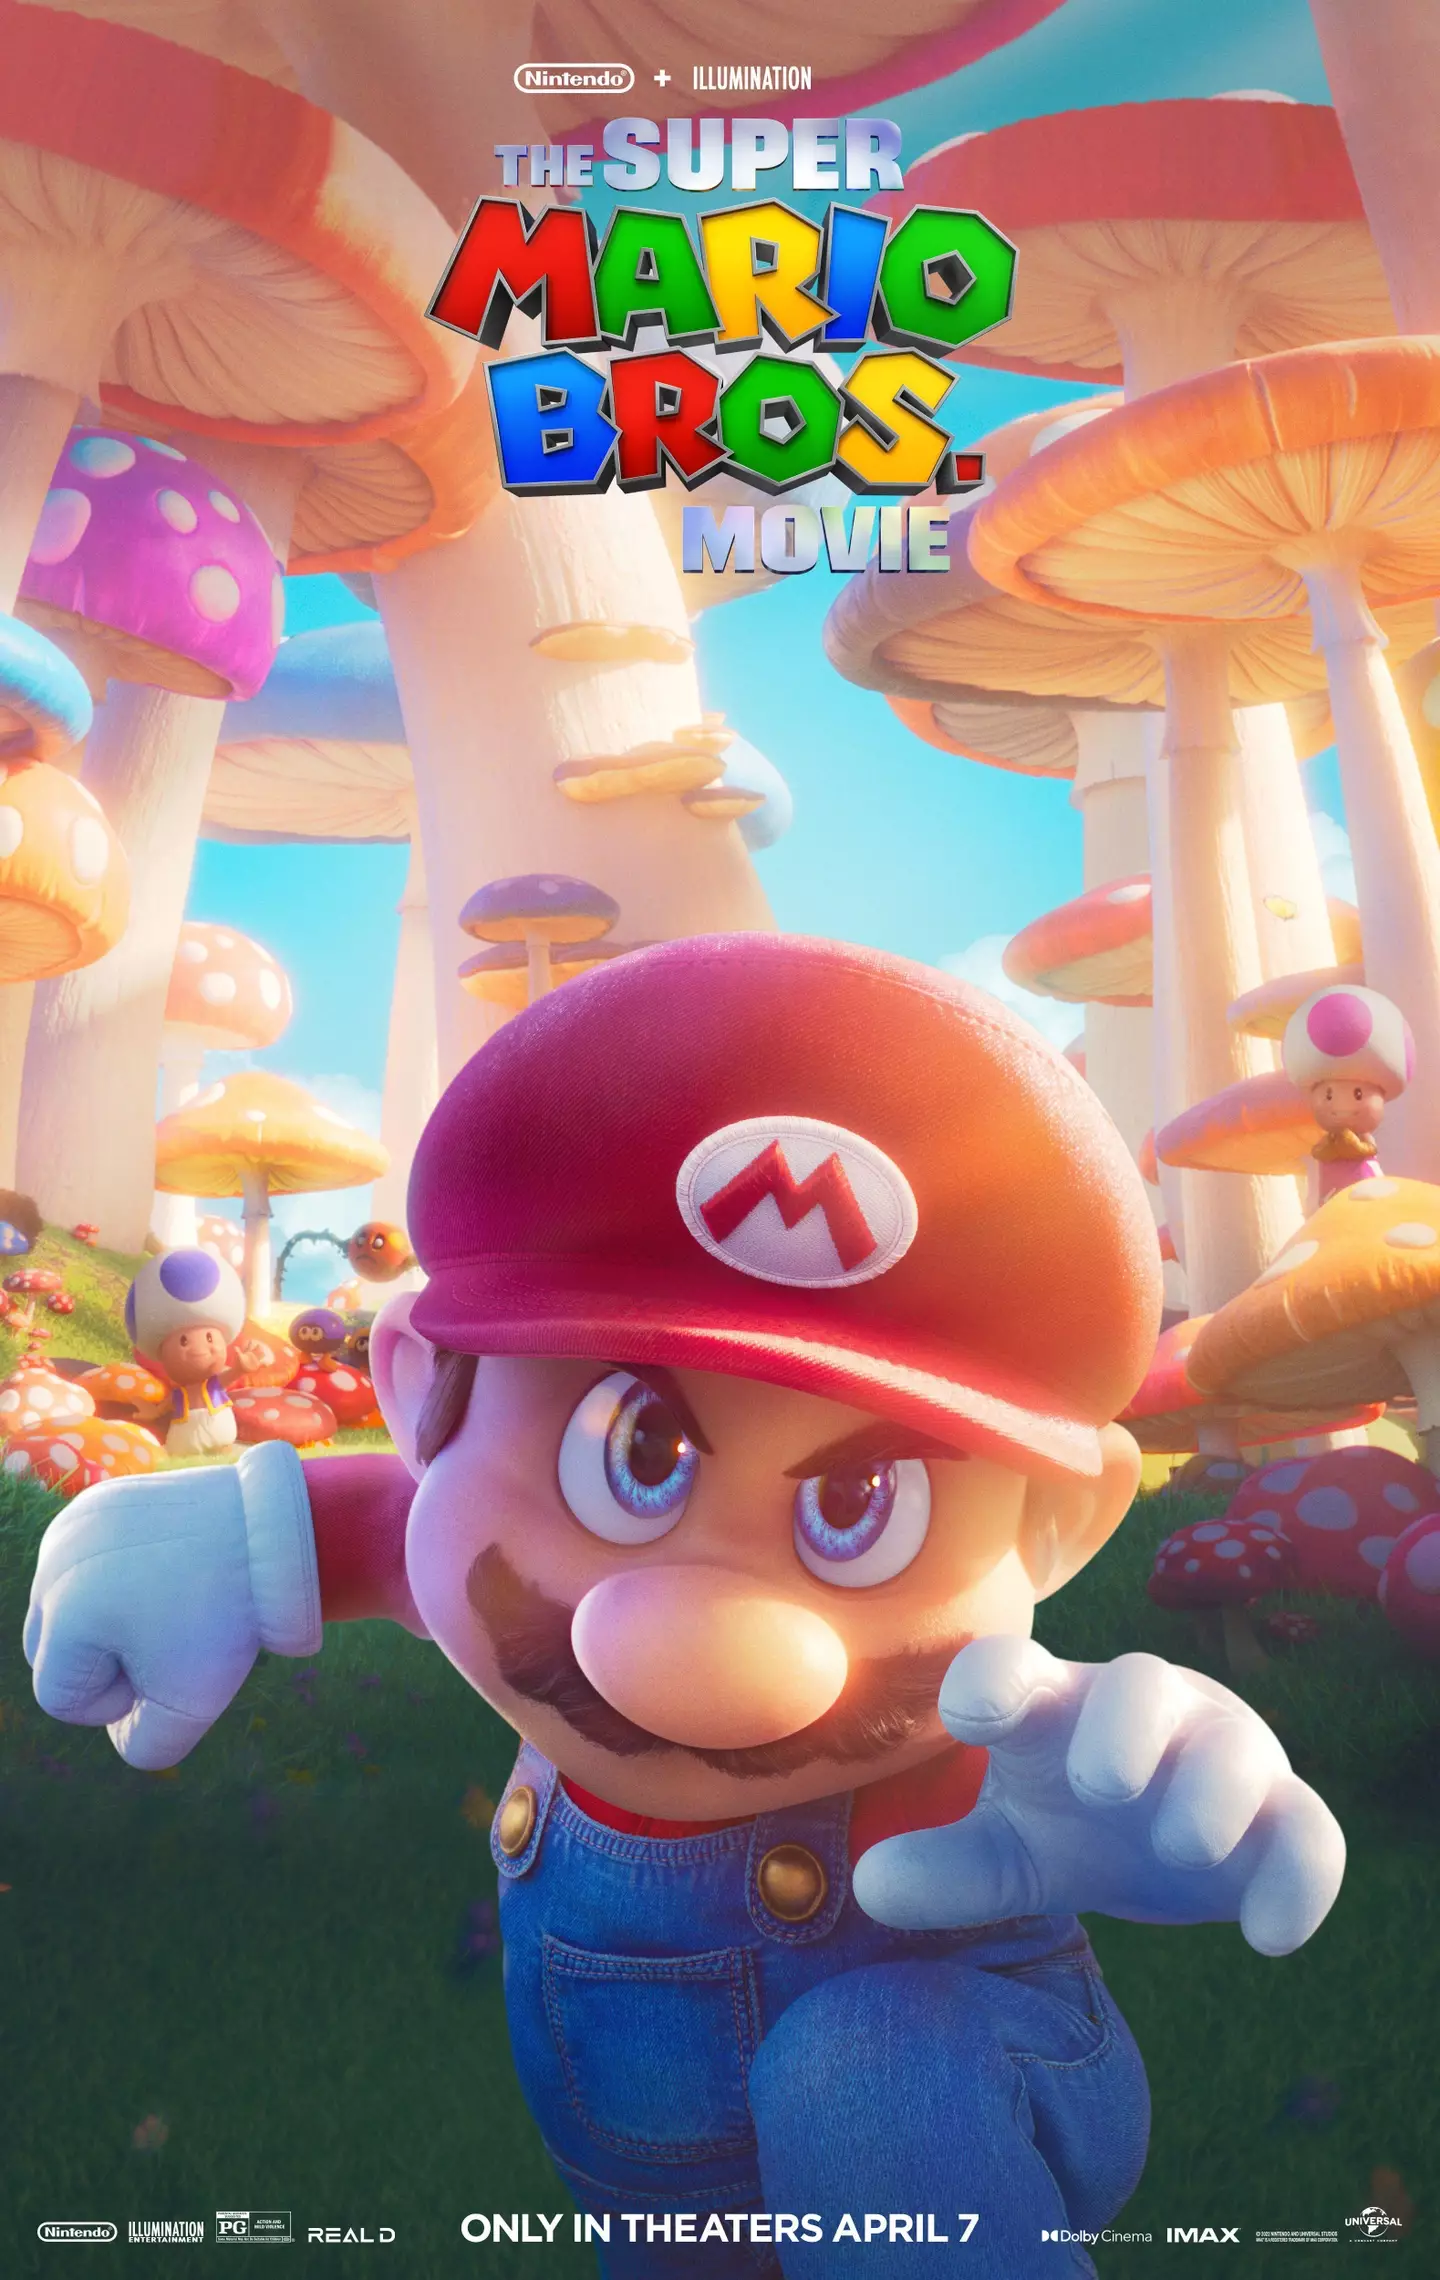 The Super Mario Bros. movie poster.